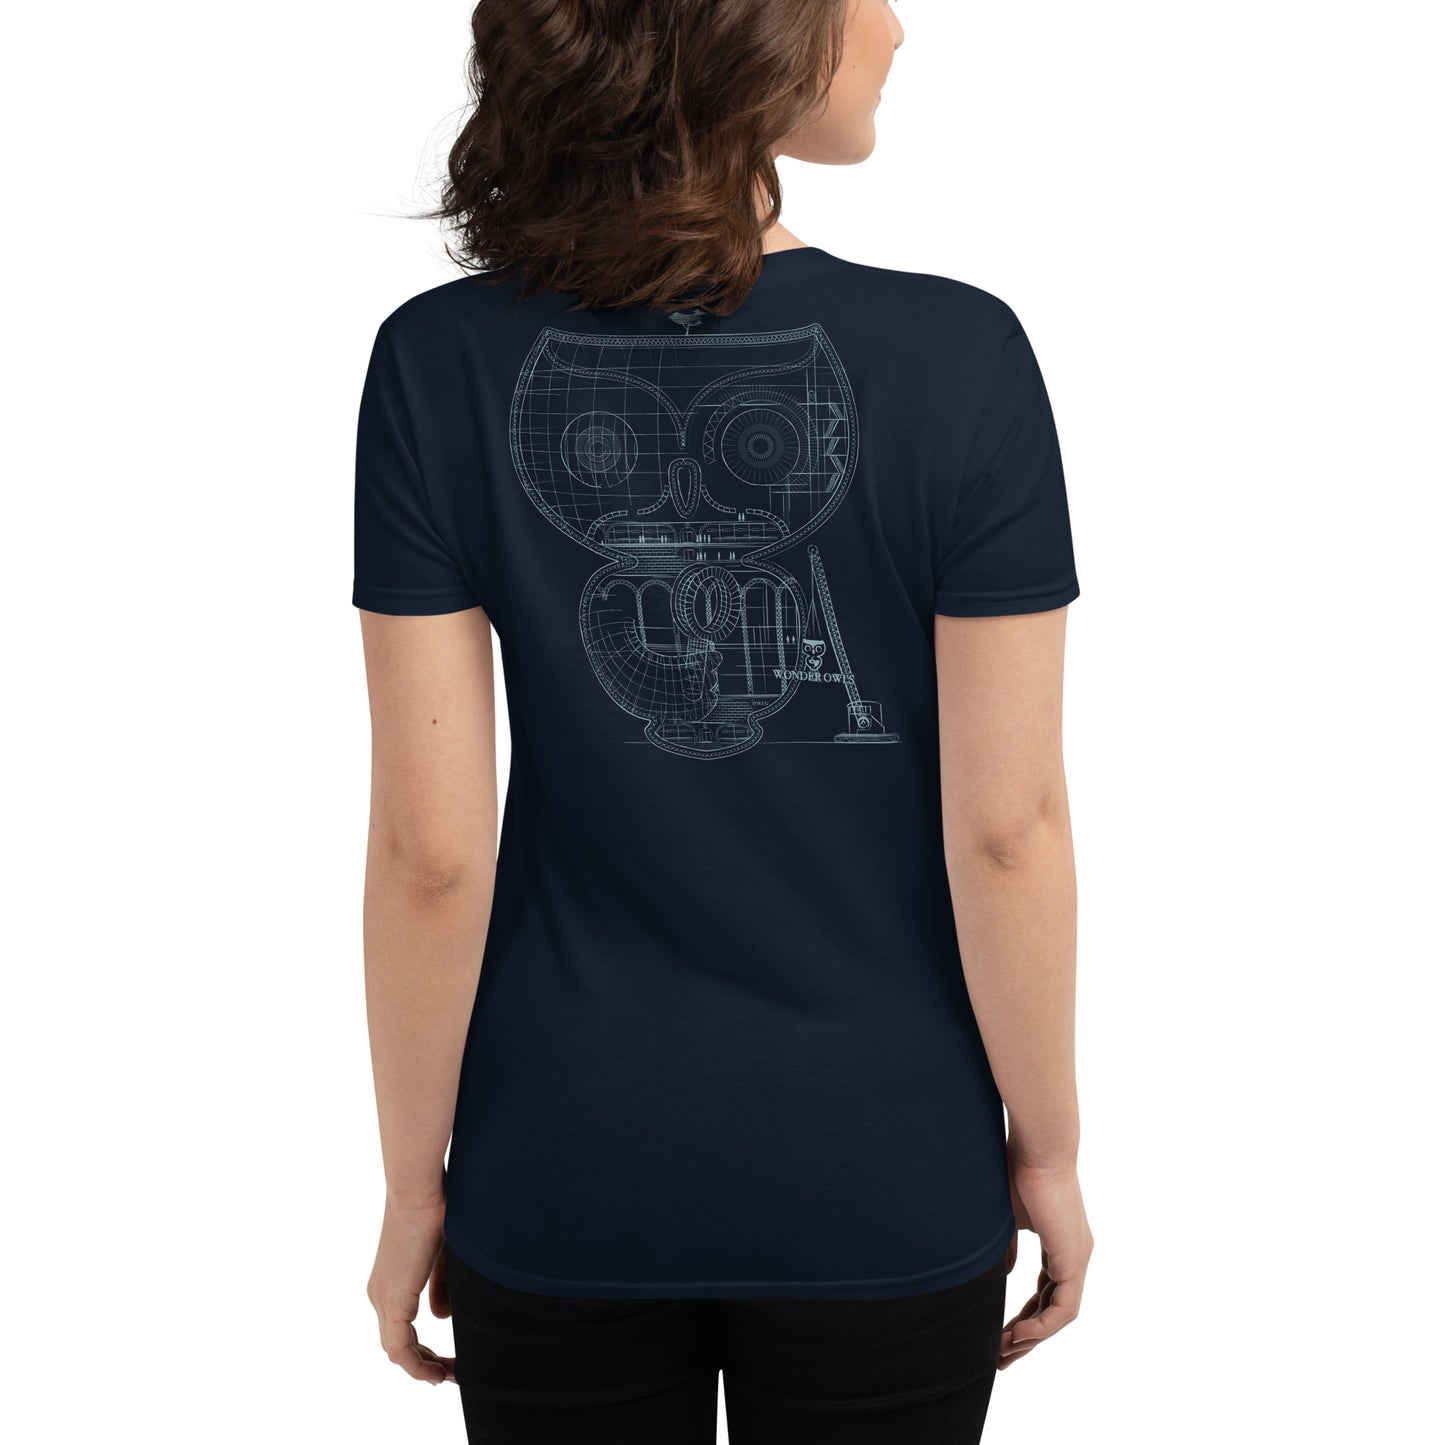 Owl Architecture Women's Short Sleeve T-shirt